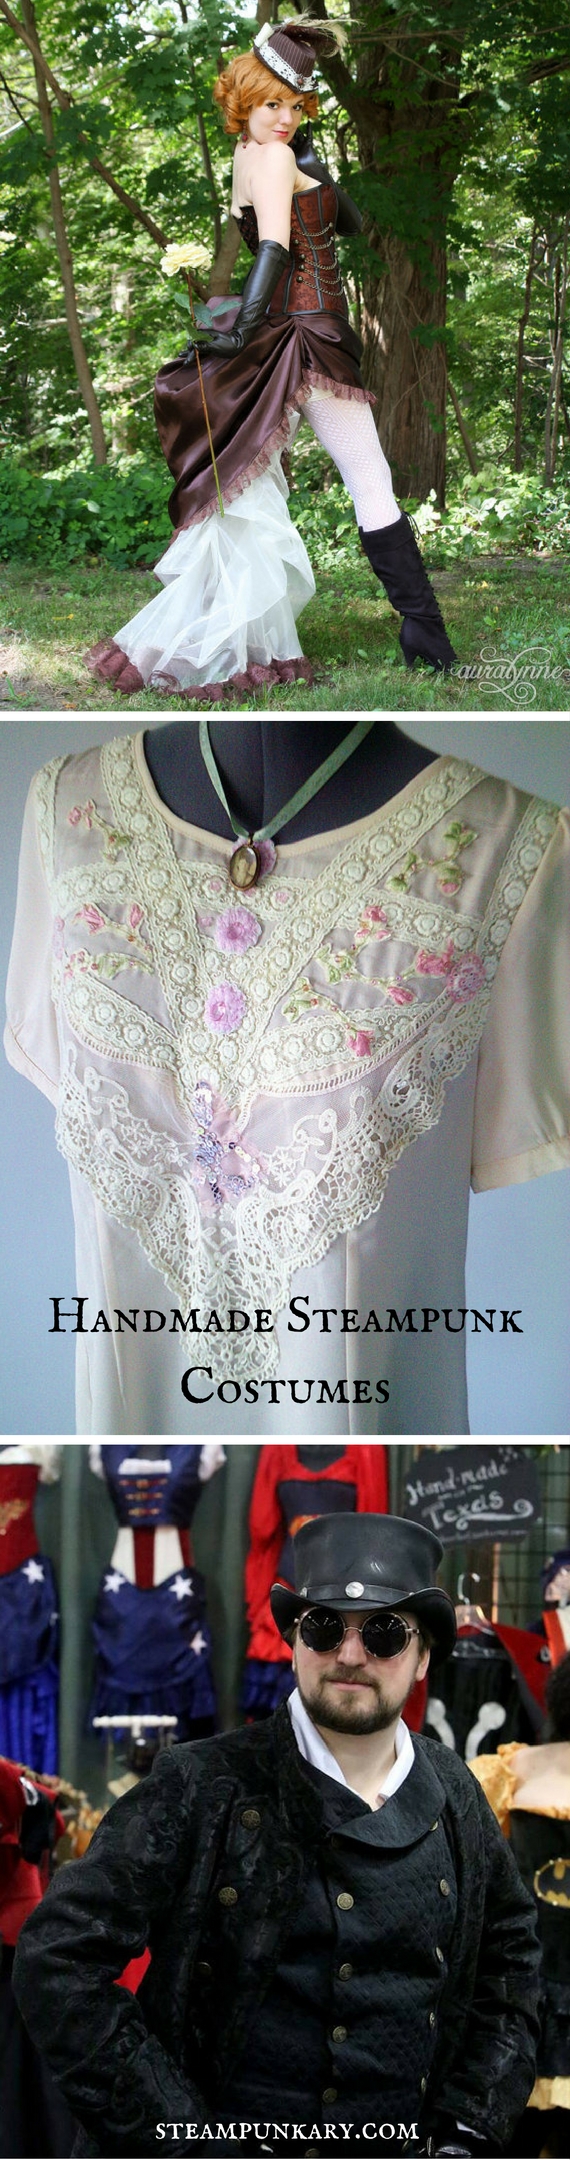 Handmade Steampunk Costumes